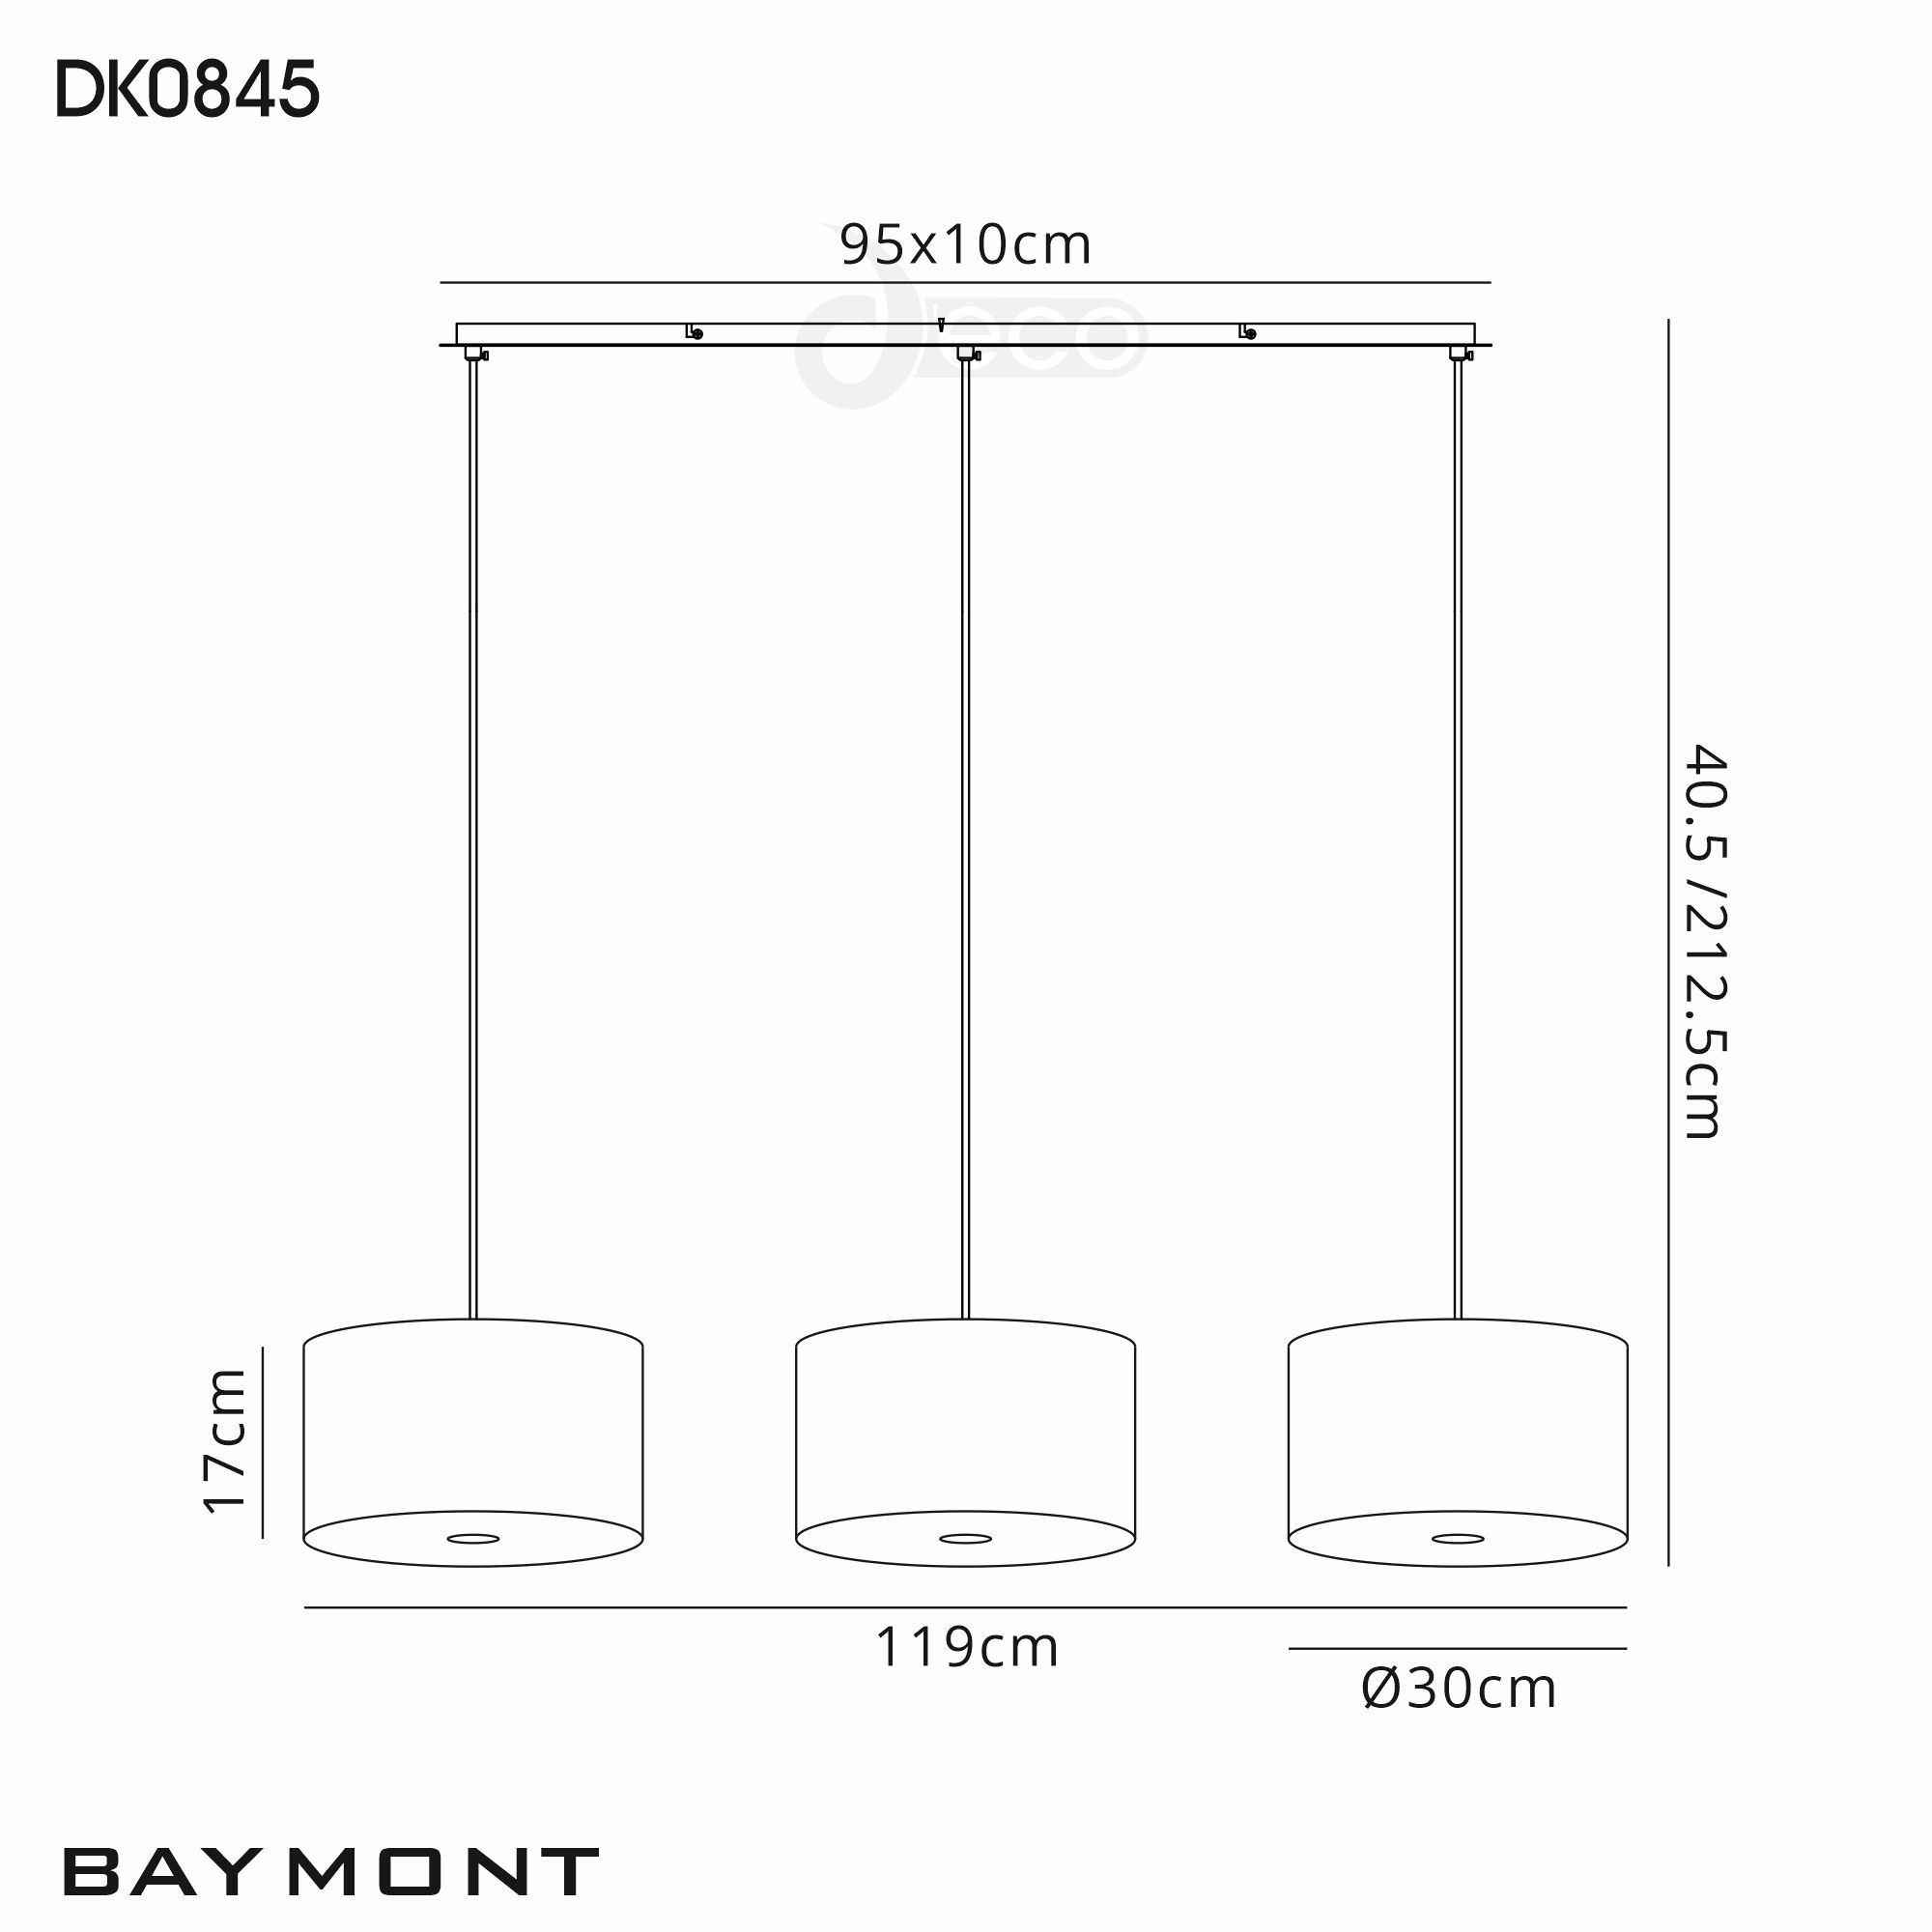 DK0845  Baymont 30cm Shade 3 Light Pendant